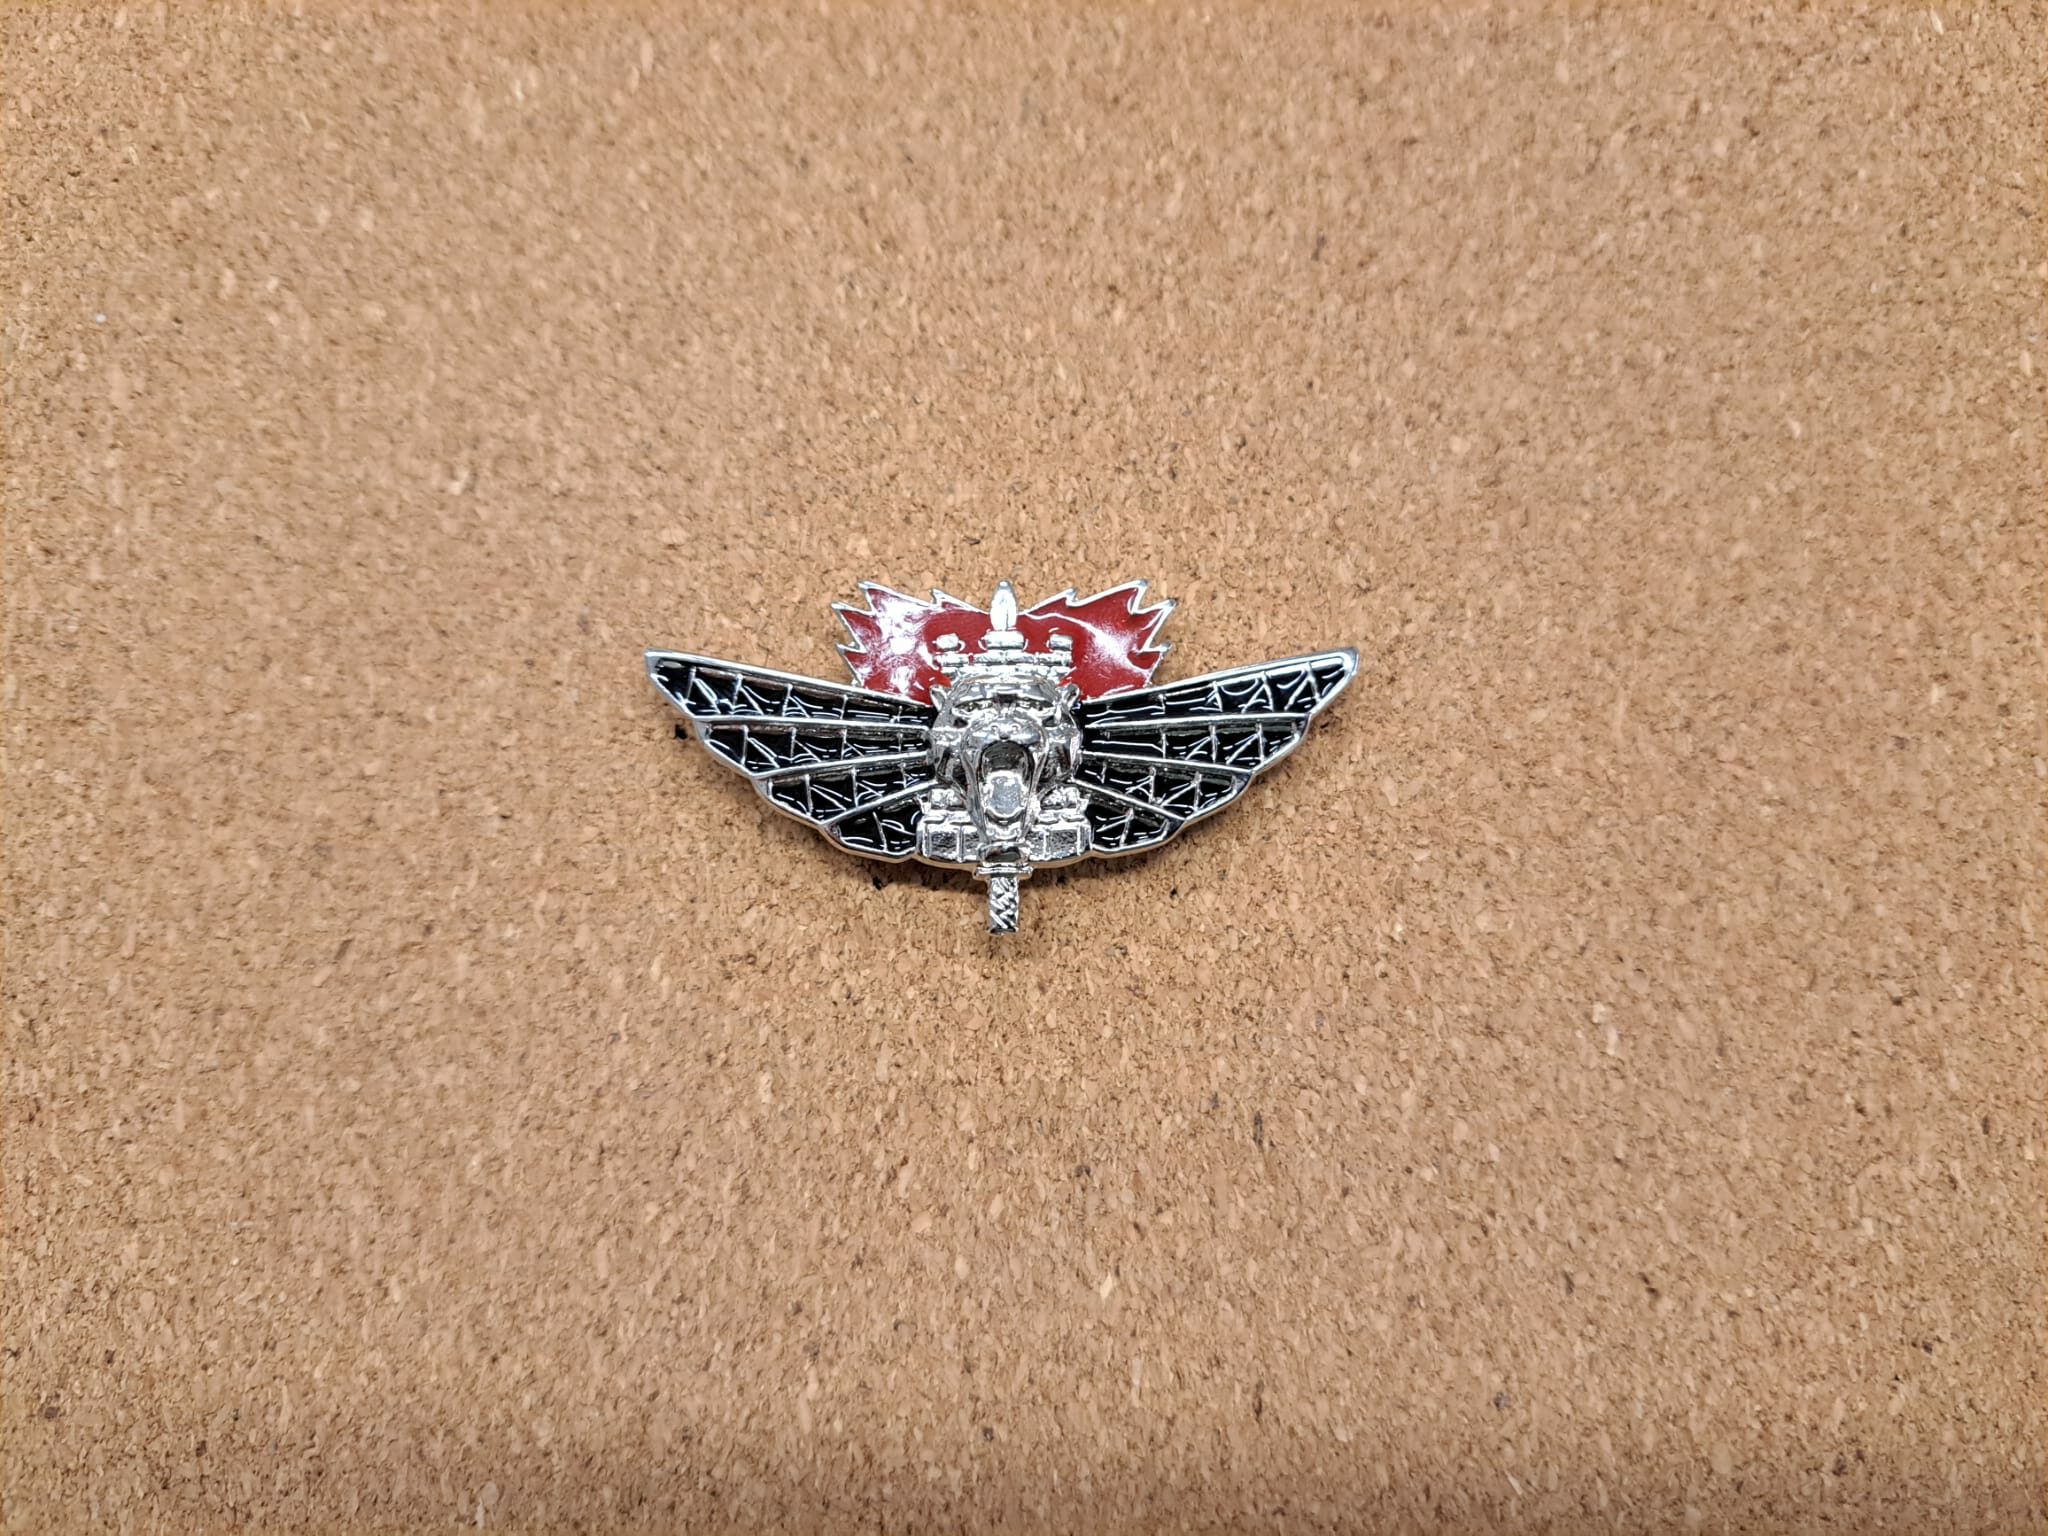 Combat Engineering Corps Pin